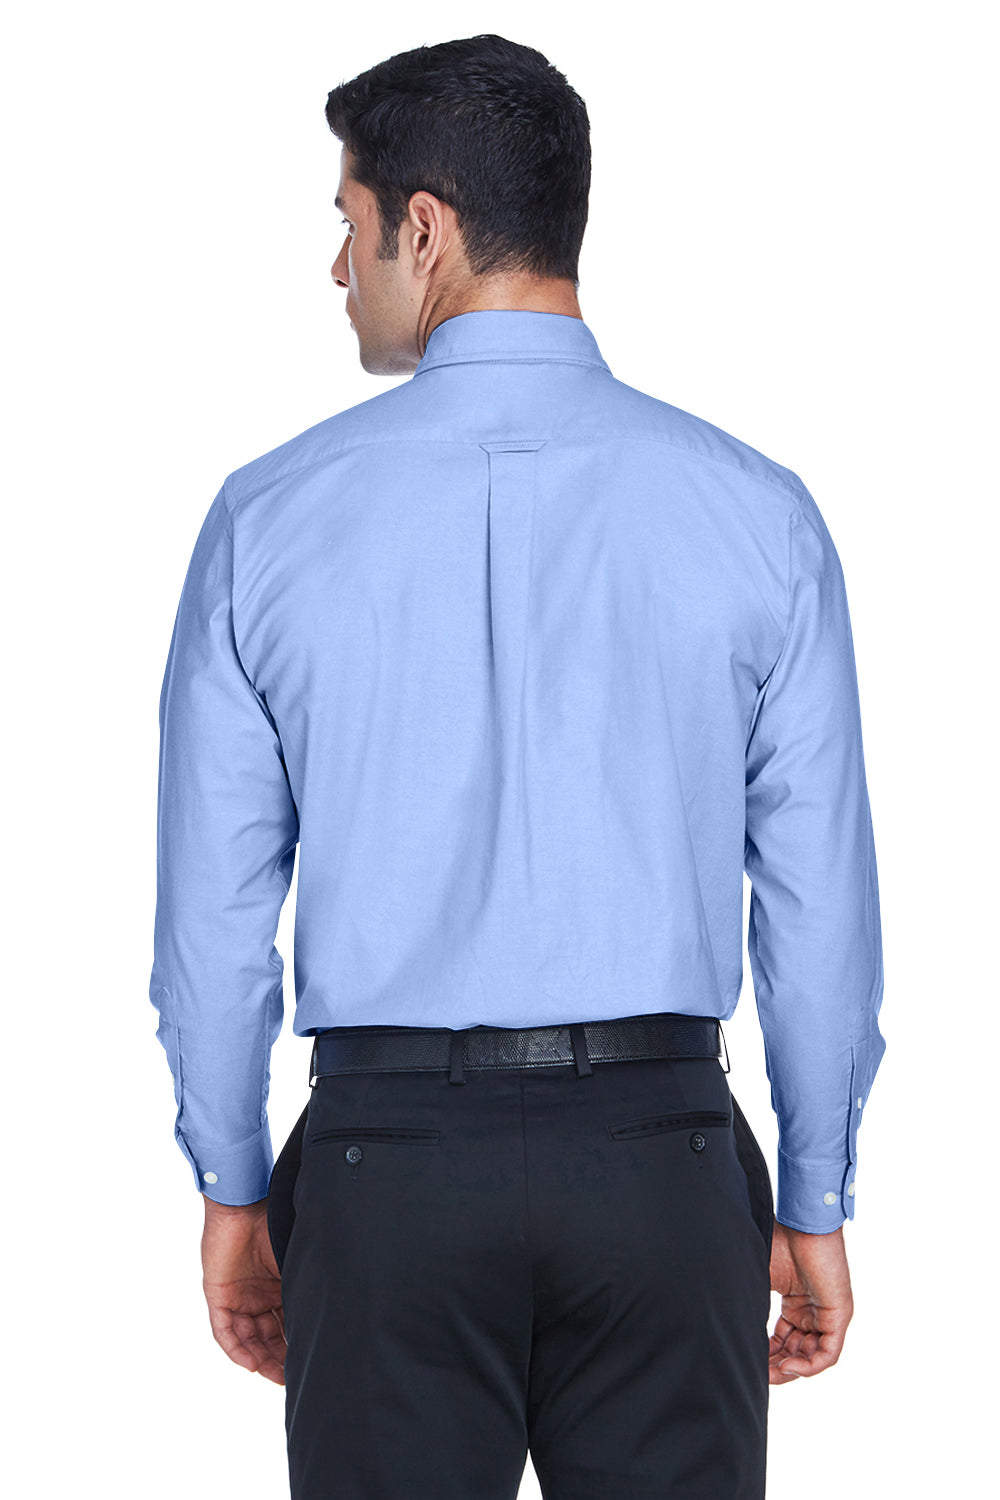 Harriton M600 Mens Oxford Wrinkle Resistant Long Sleeve Button Down Shirt w/ Pocket Light Blue Back